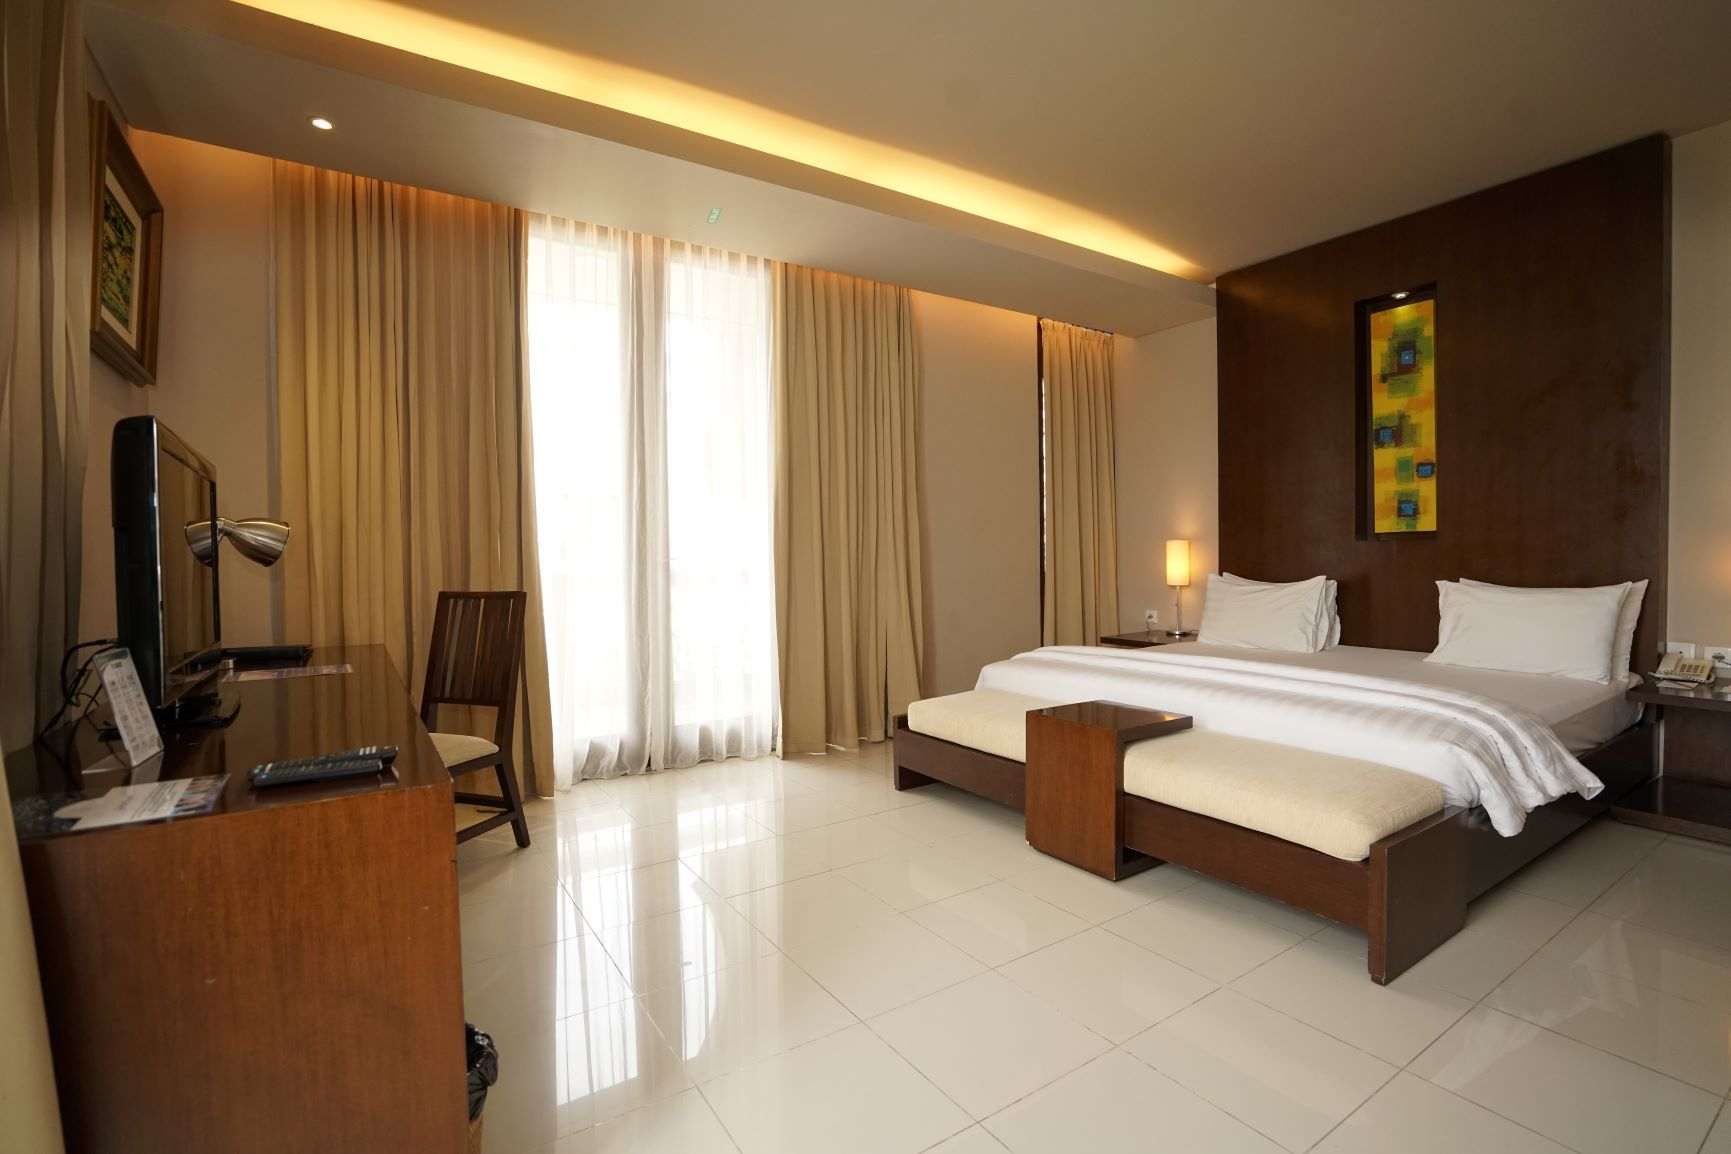 Bedroom 5, The Pade Hotel, Banda Aceh